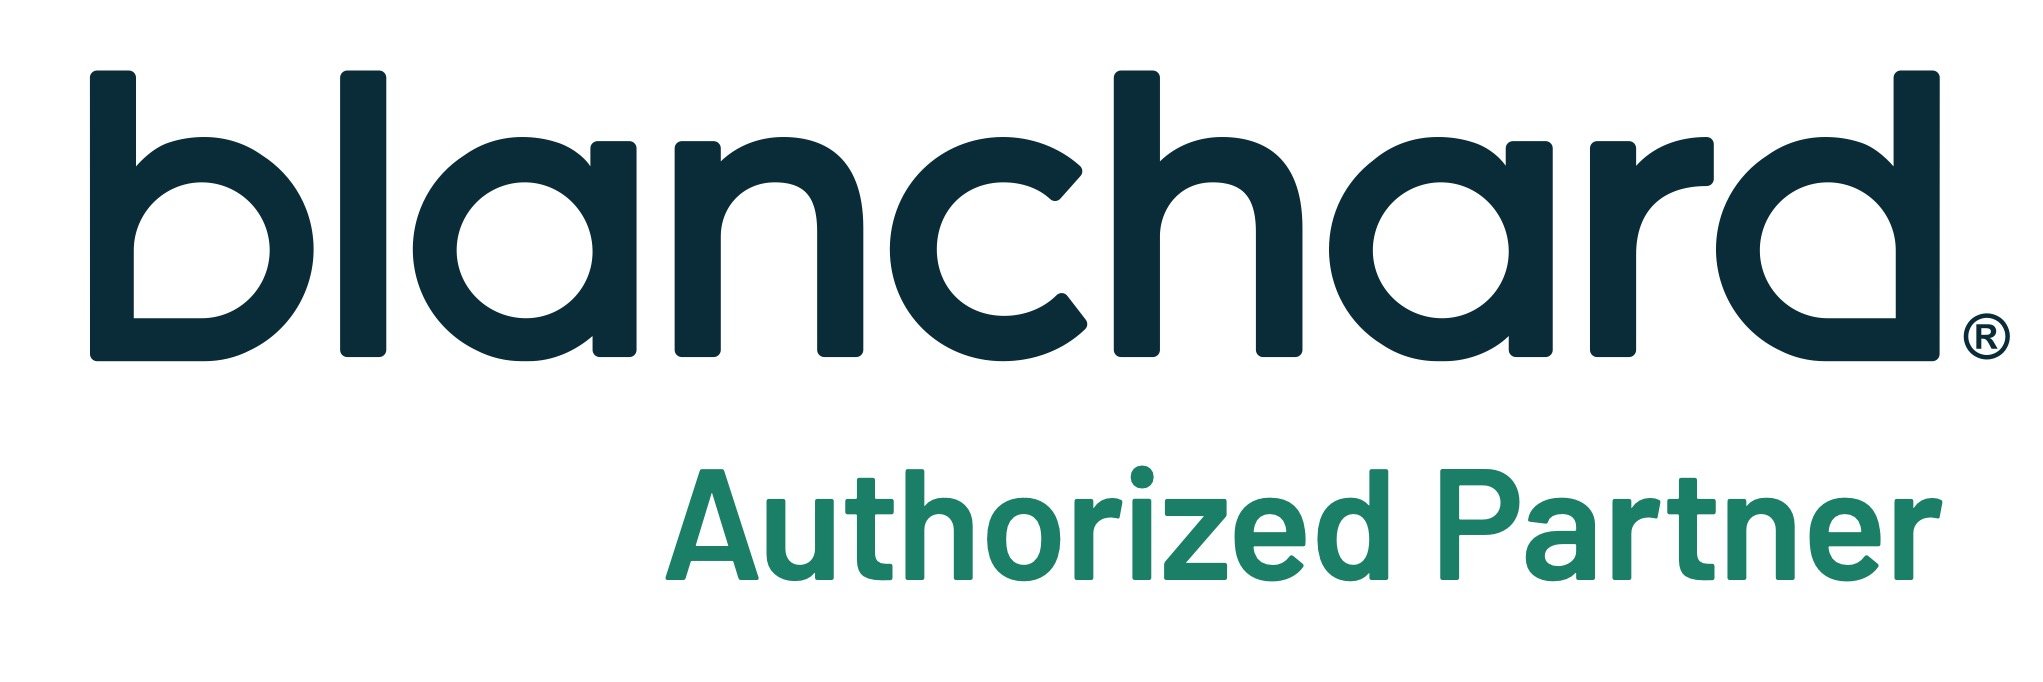 Blanchard Authorize Partner Logo_vector.jpg